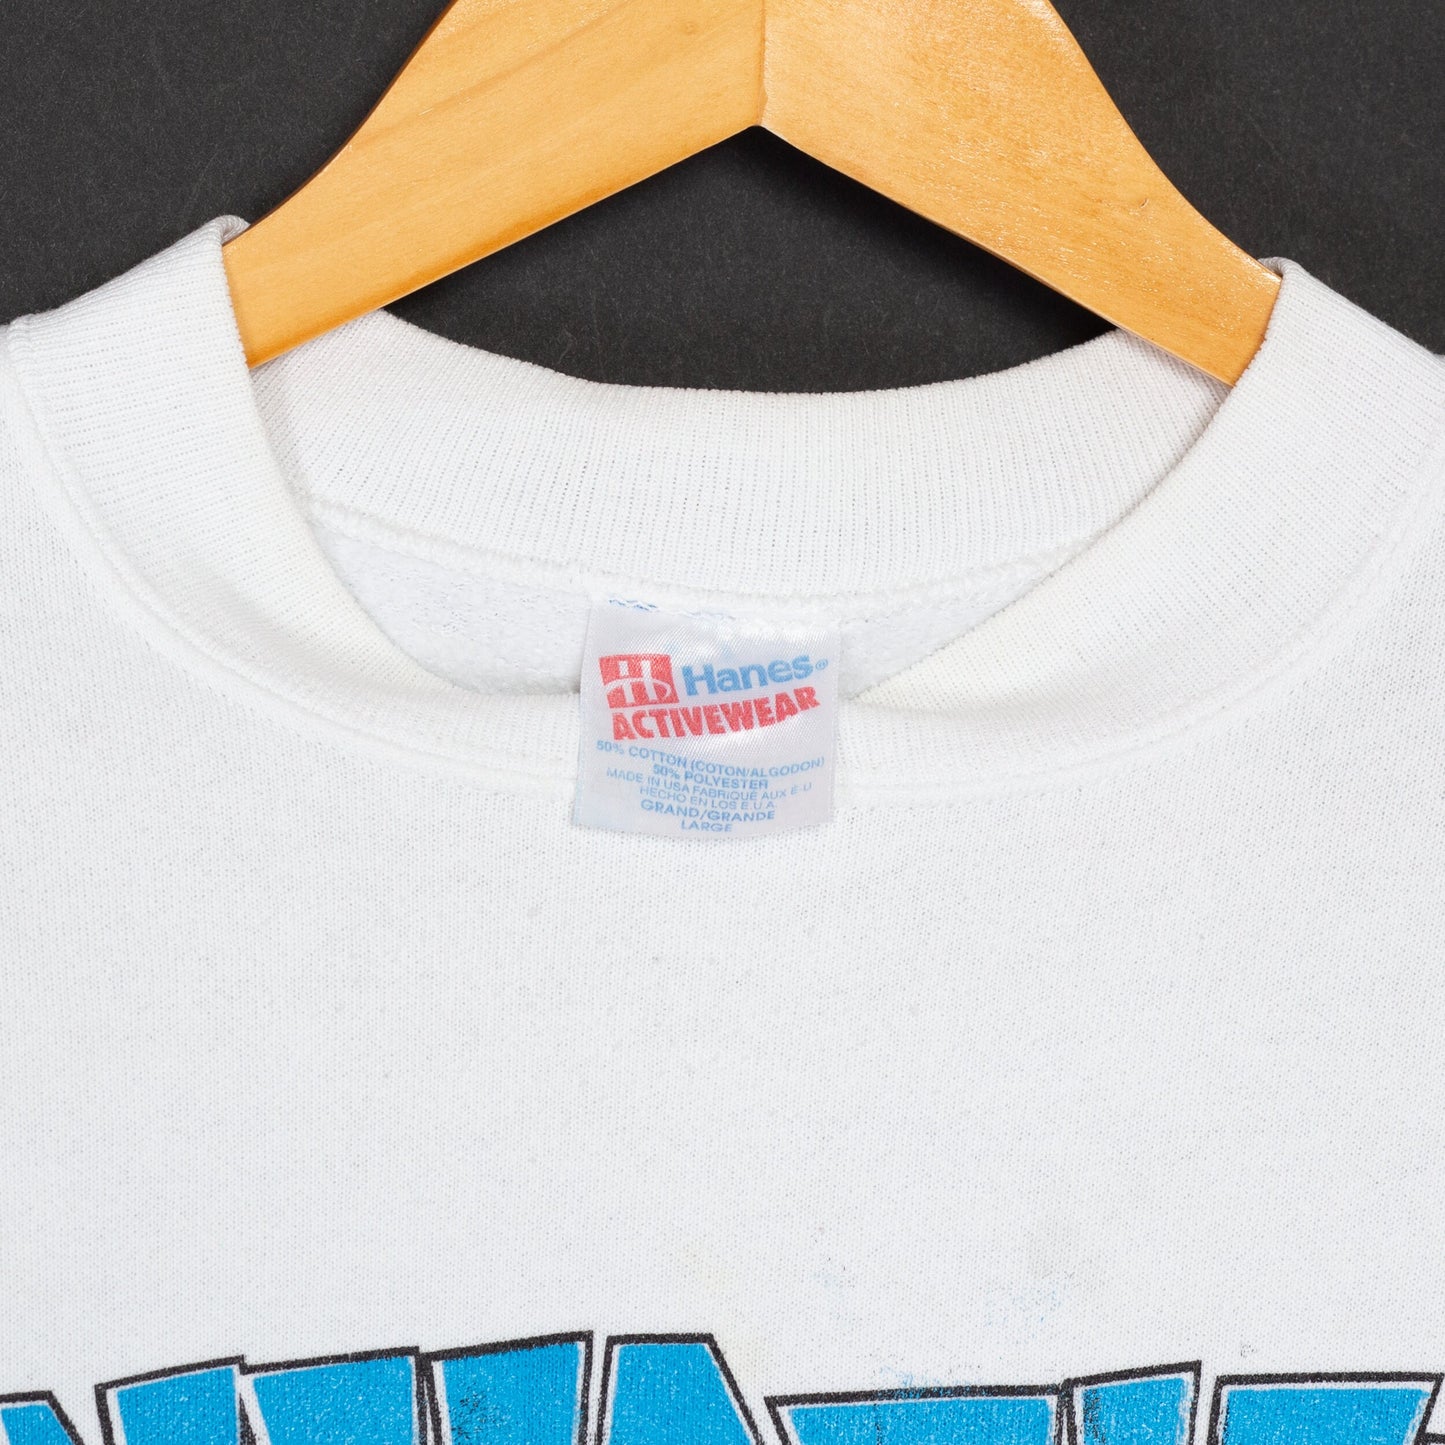 Medium Vintage Whatizit Atlanta 1996 Olympics Izzy Mascot Sweatshirt | 90s White Crewneck Athletic Pullover